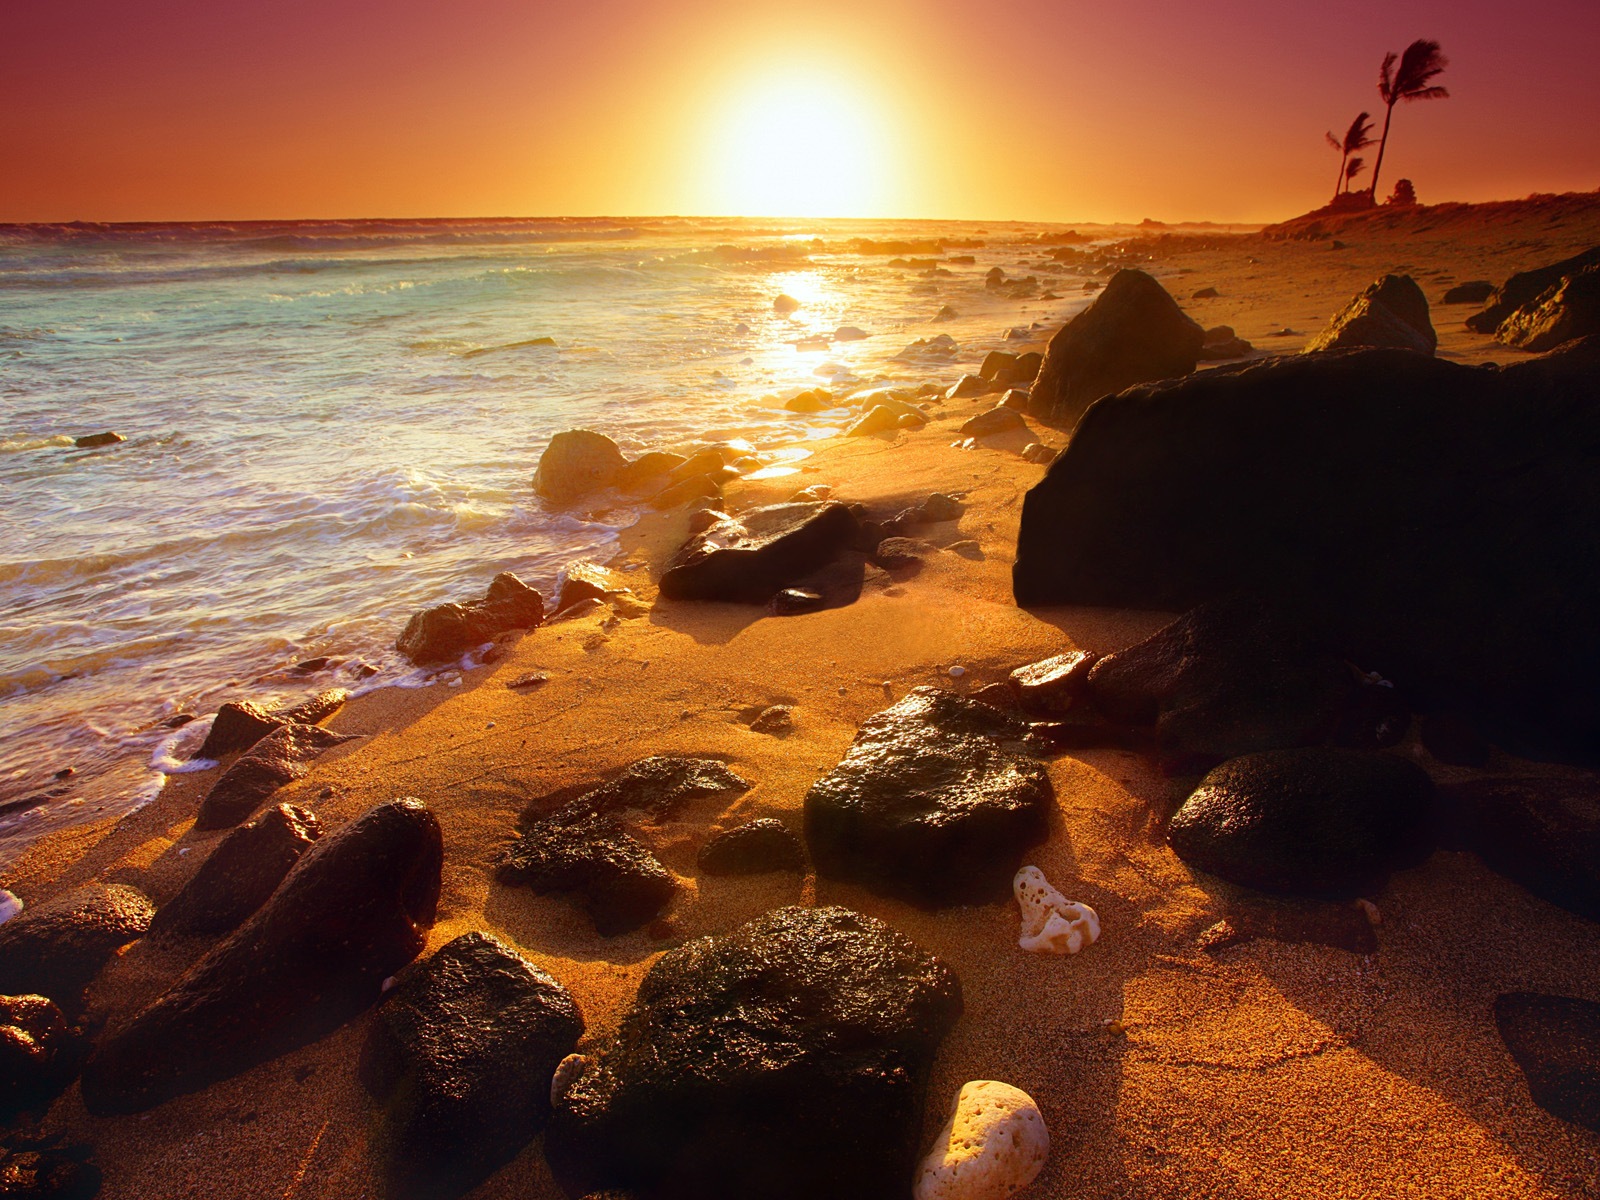 Windows 8 theme wallpaper: Beach sunrise and sunset views #1 - 1600x1200